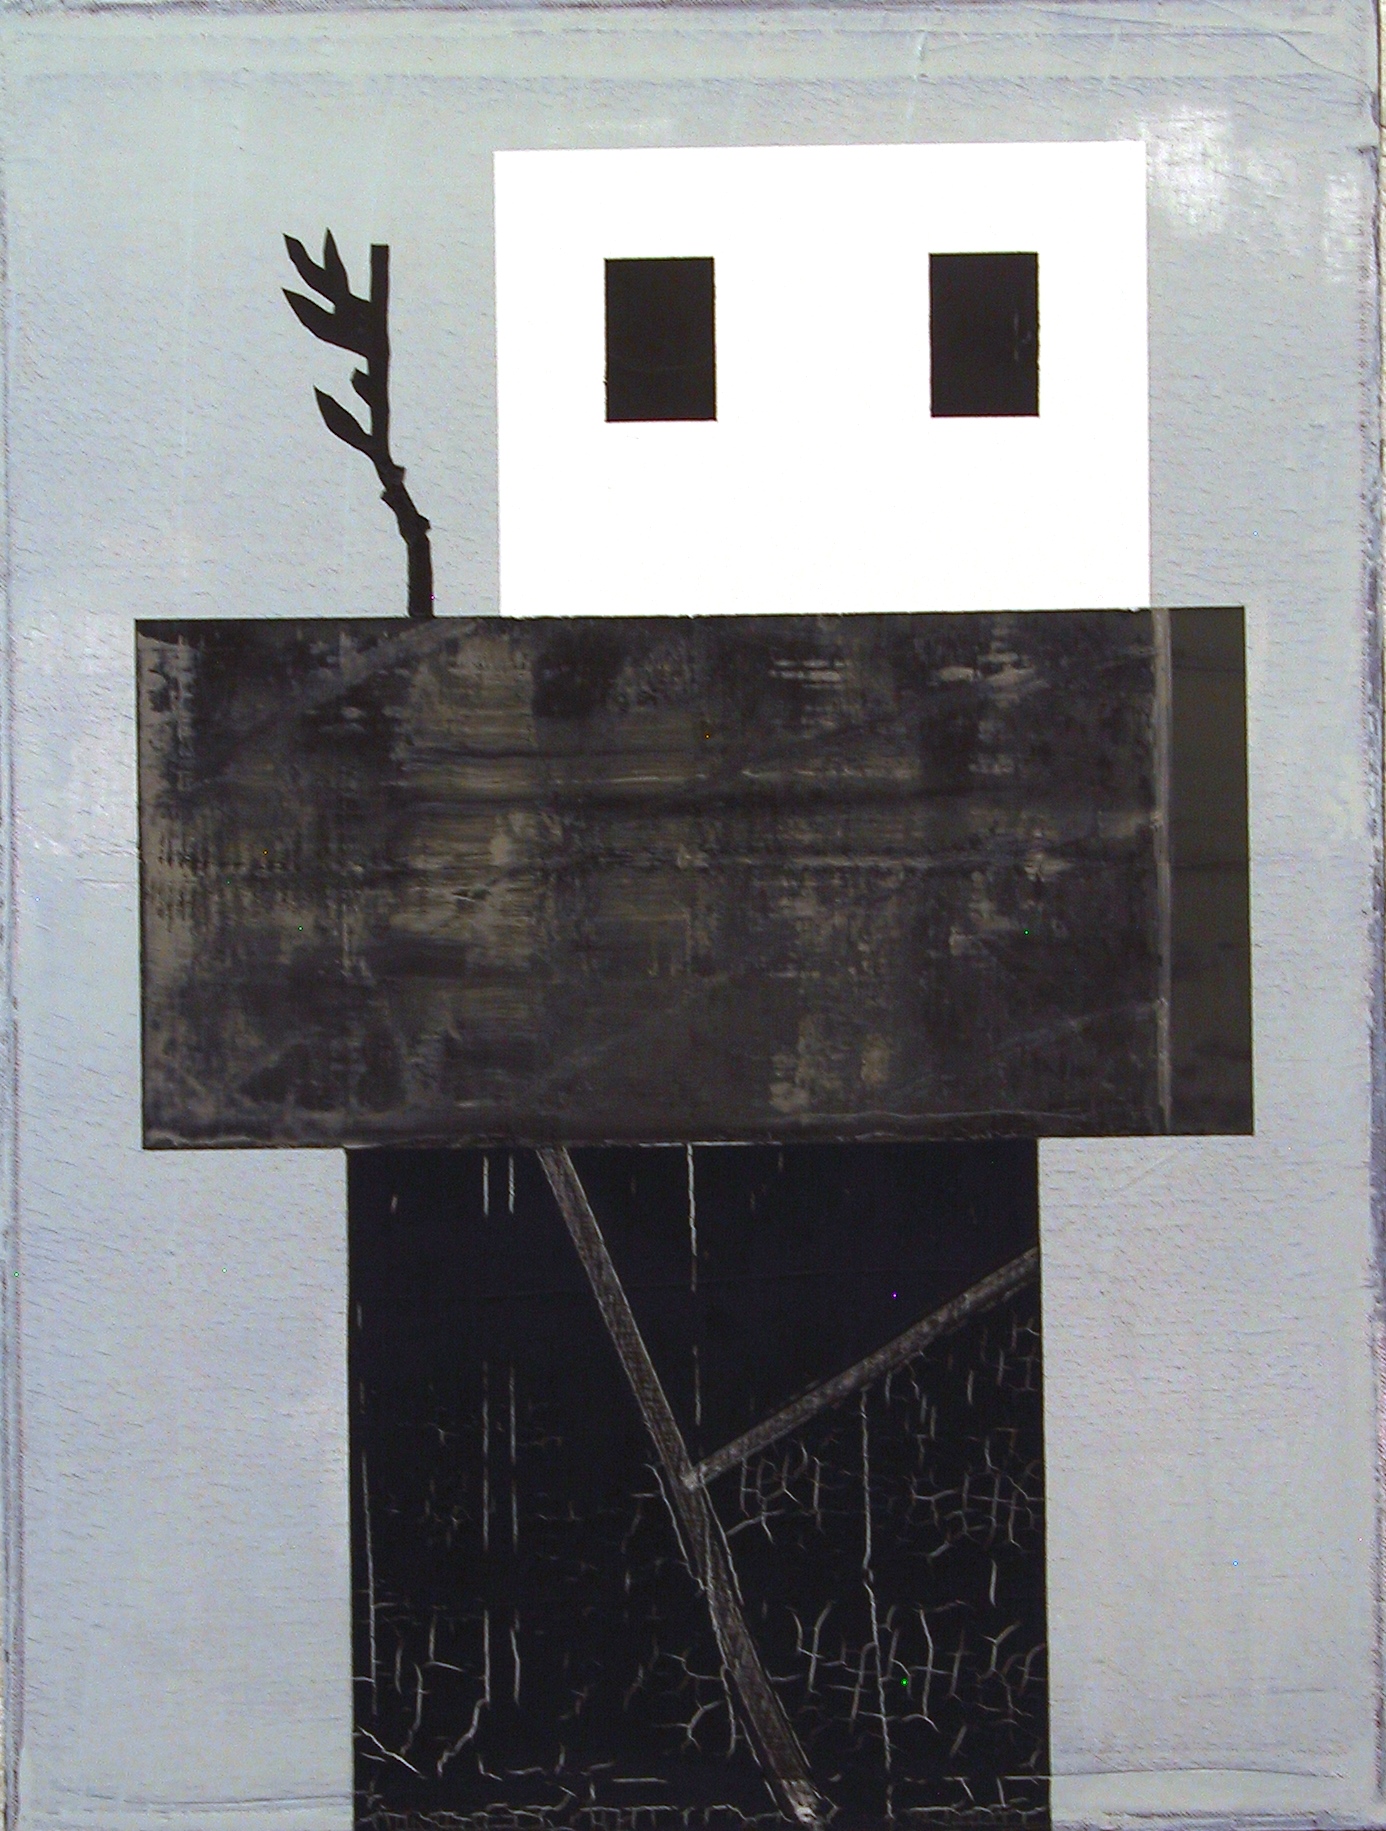 Larry Abramson, Return of the Black Square XV, 2015, oil on canvas, 60x45 cm